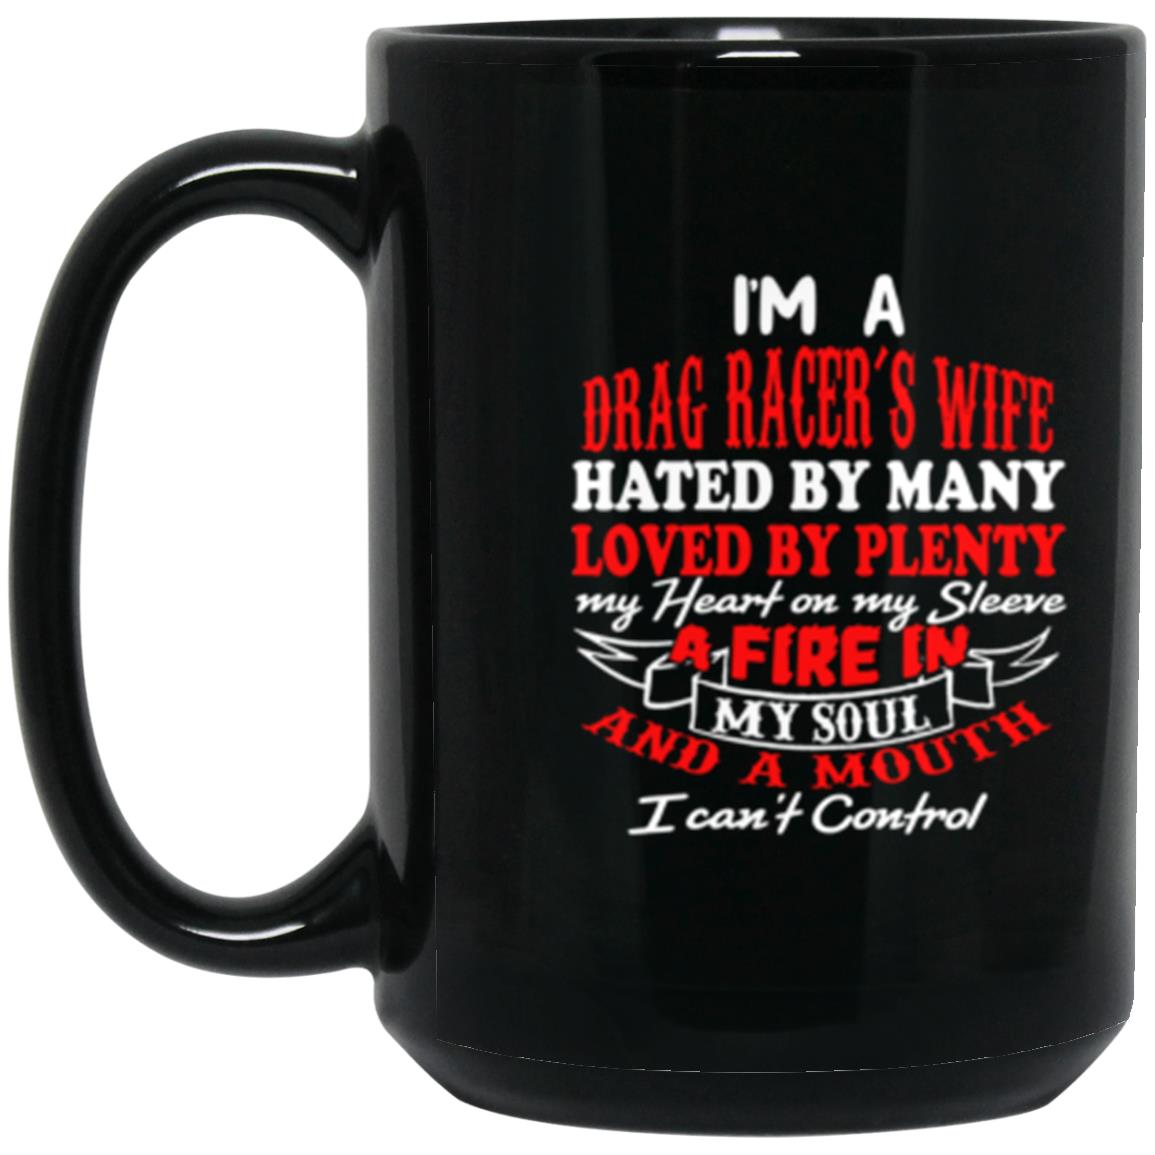 I'm A Drag Racer's Wife Hated By Many Loved By Plenty 15 oz. Black Mug